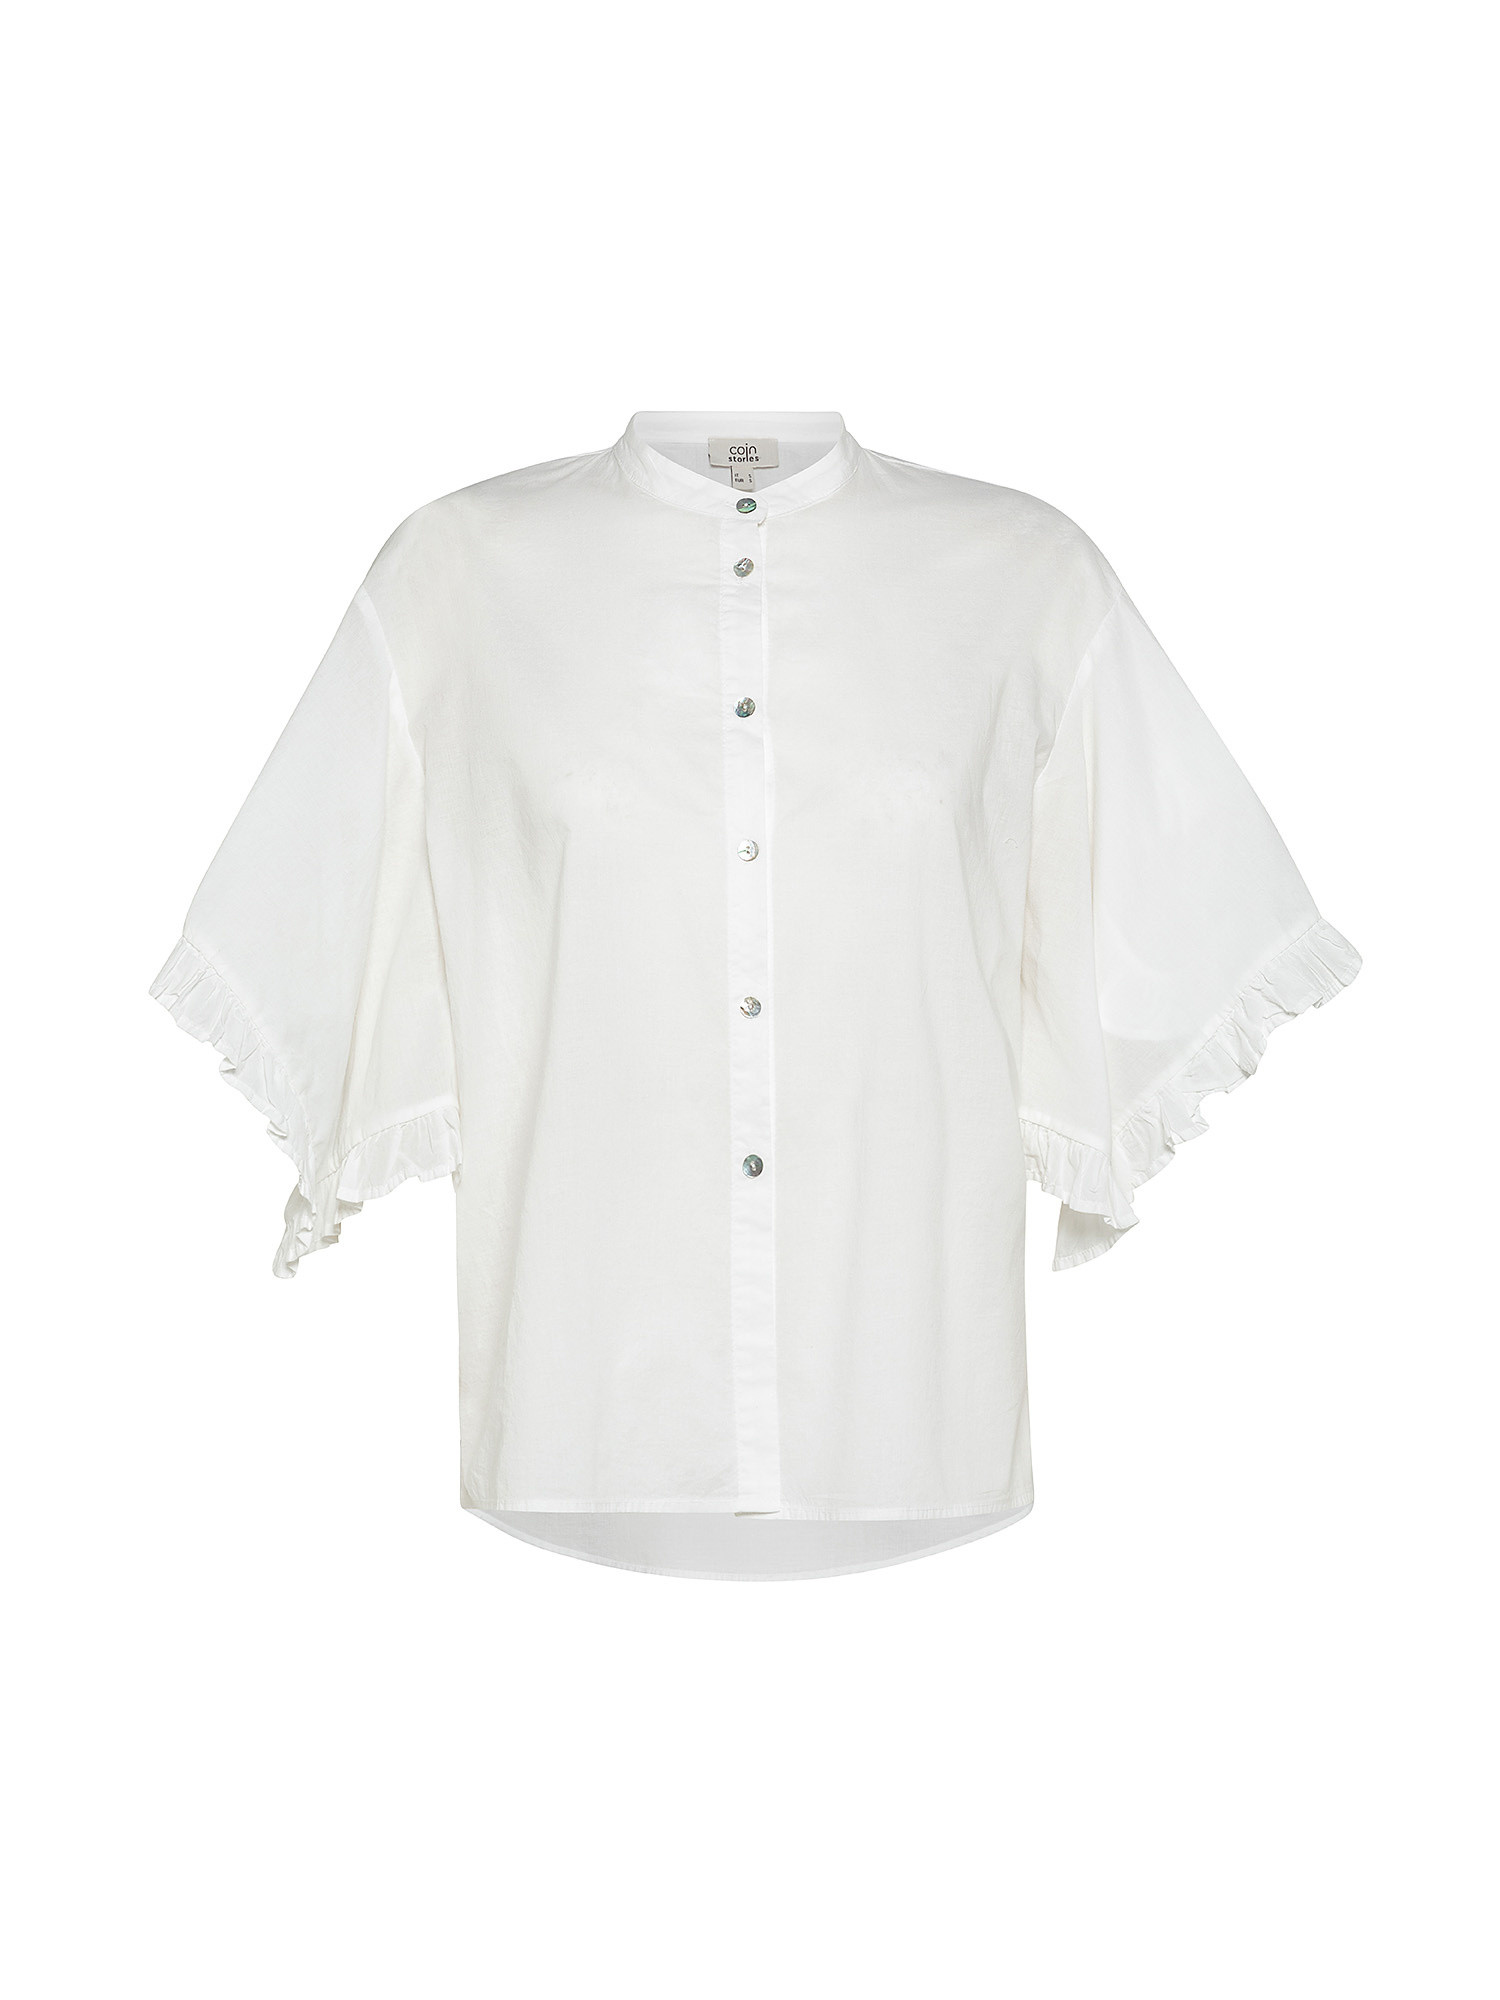 Shirt, White, large image number 0